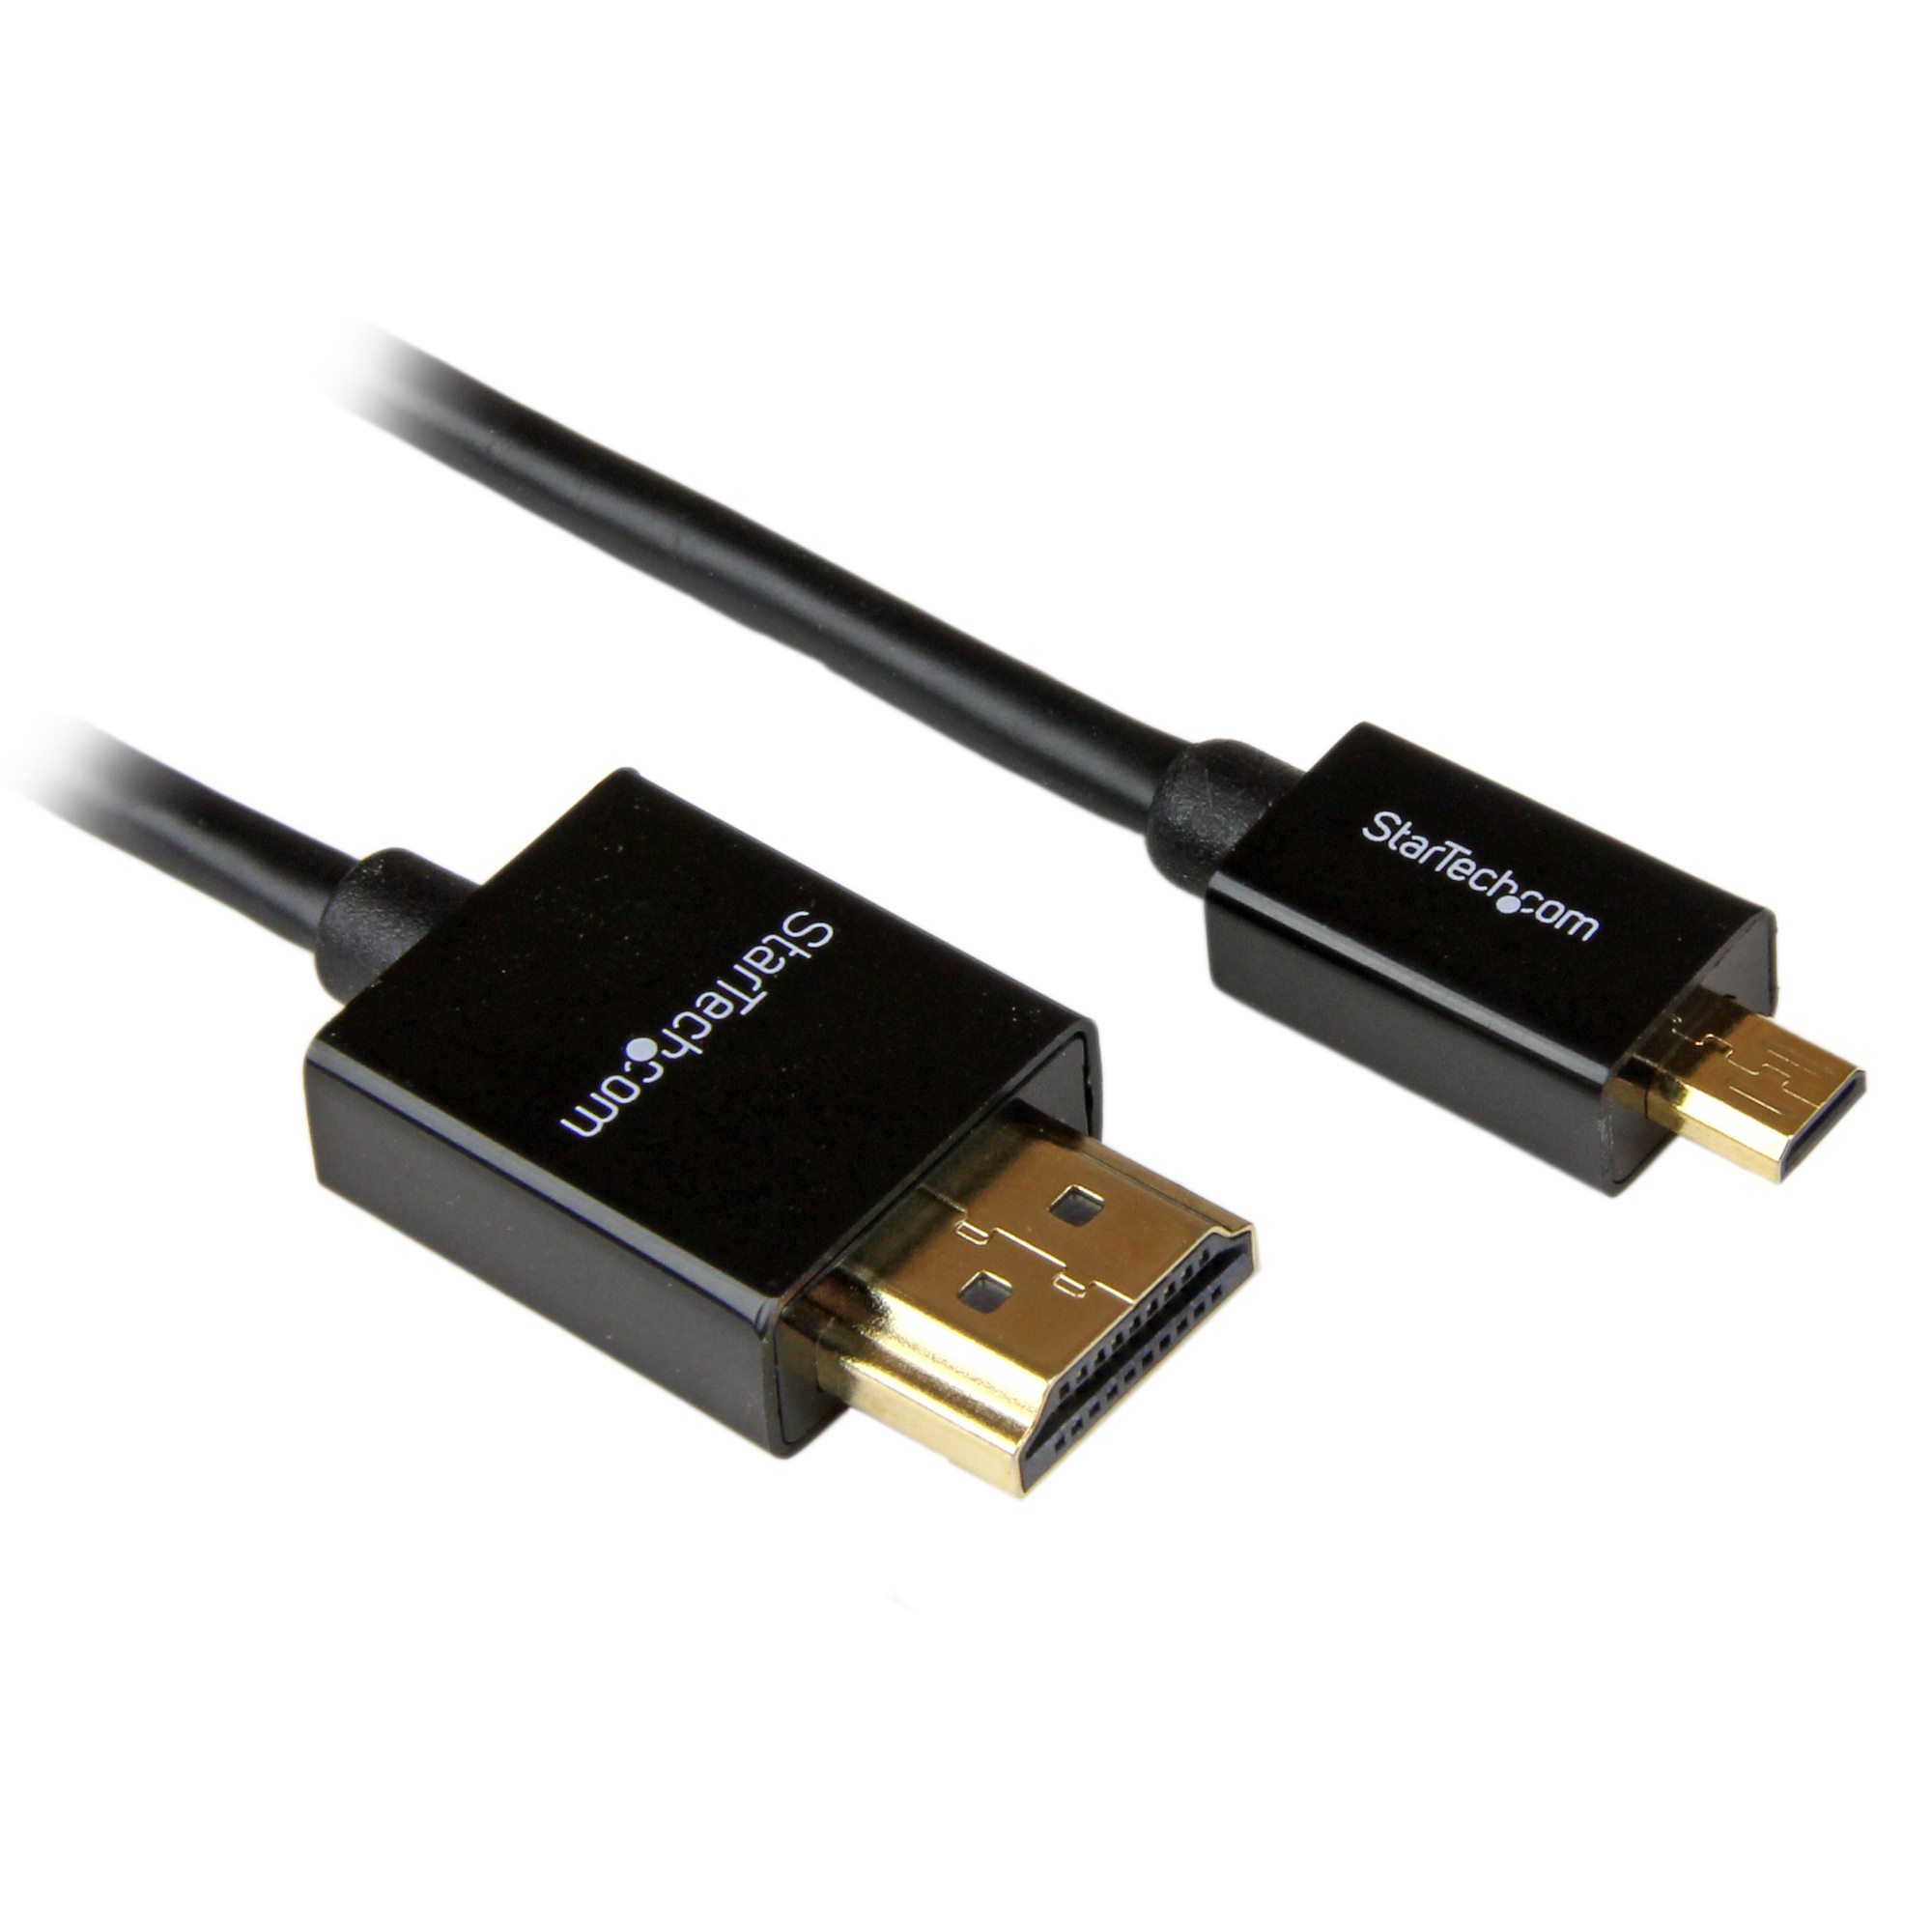 HDADFM5IN  StarTech.com 4K @ 30Hz HDMI 1.4 Female HDMI to Male